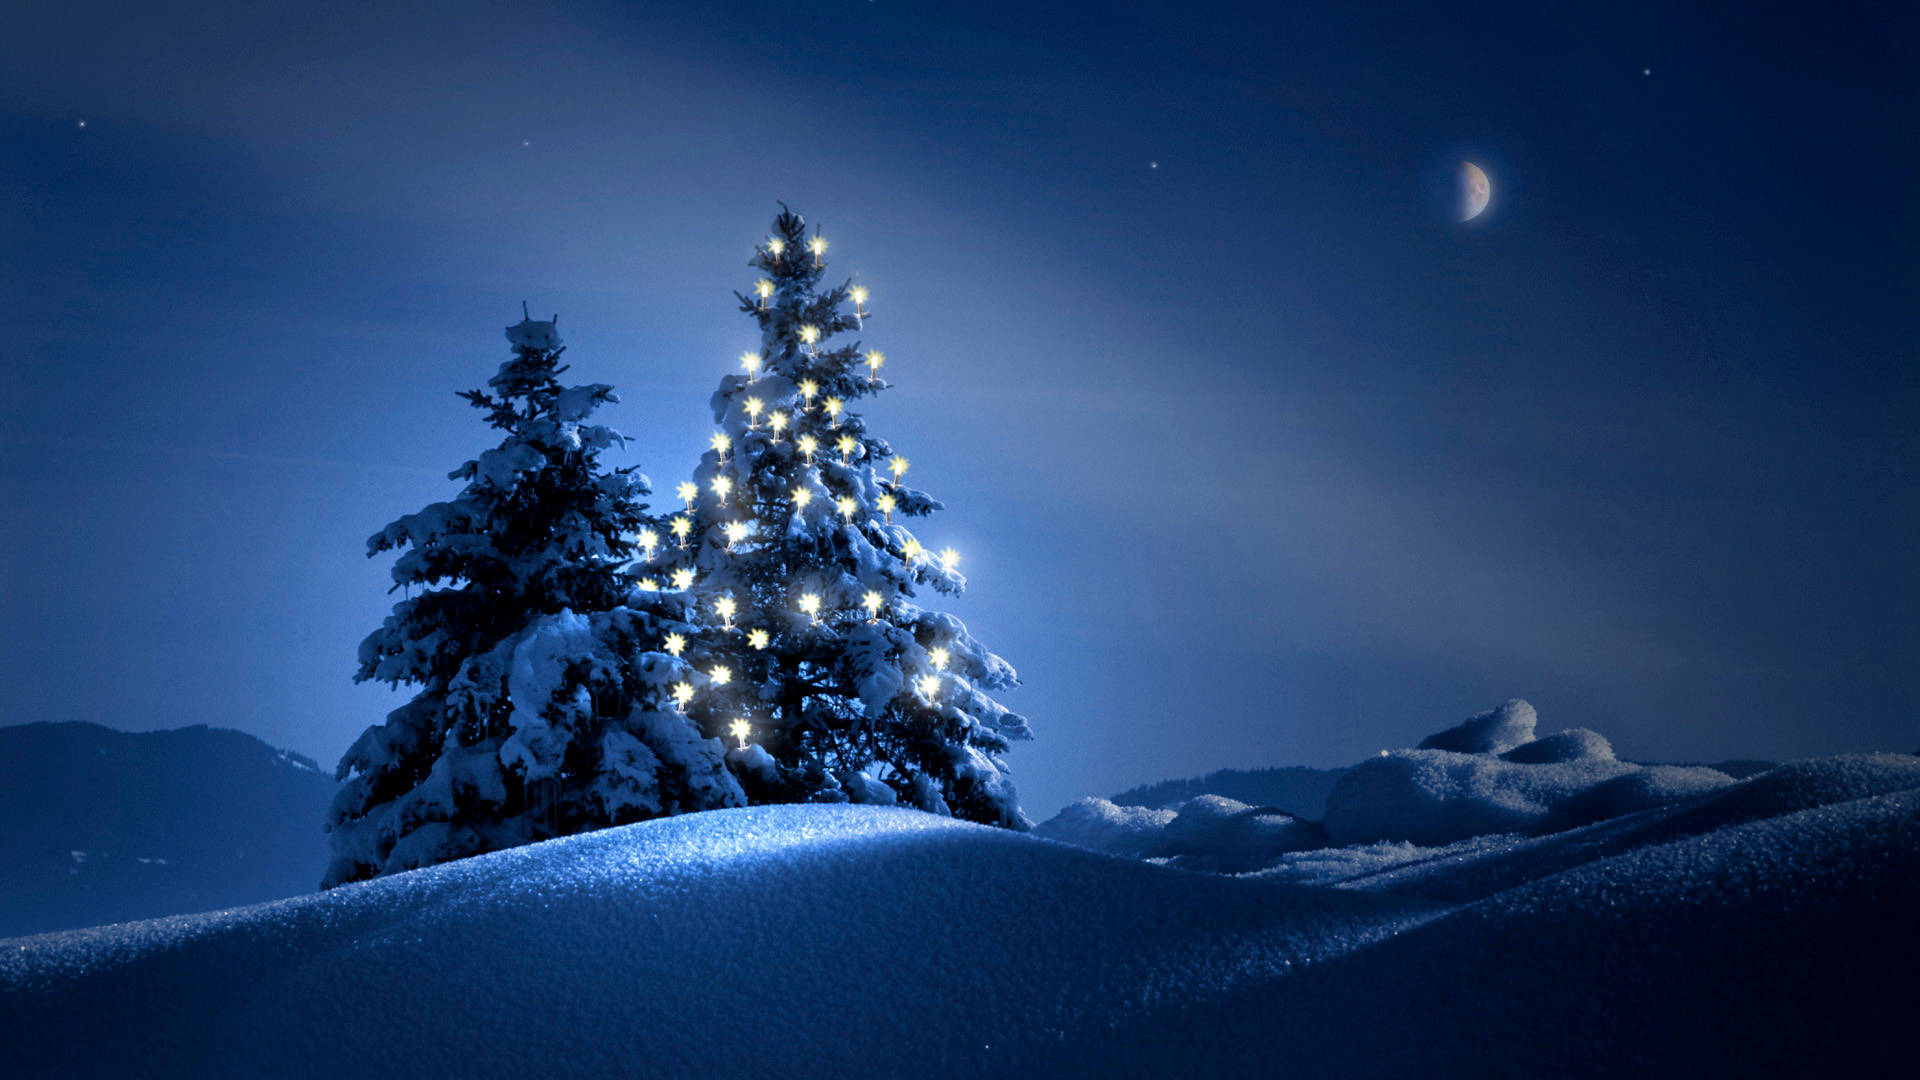 Hd Scenery Night Christmas Tree